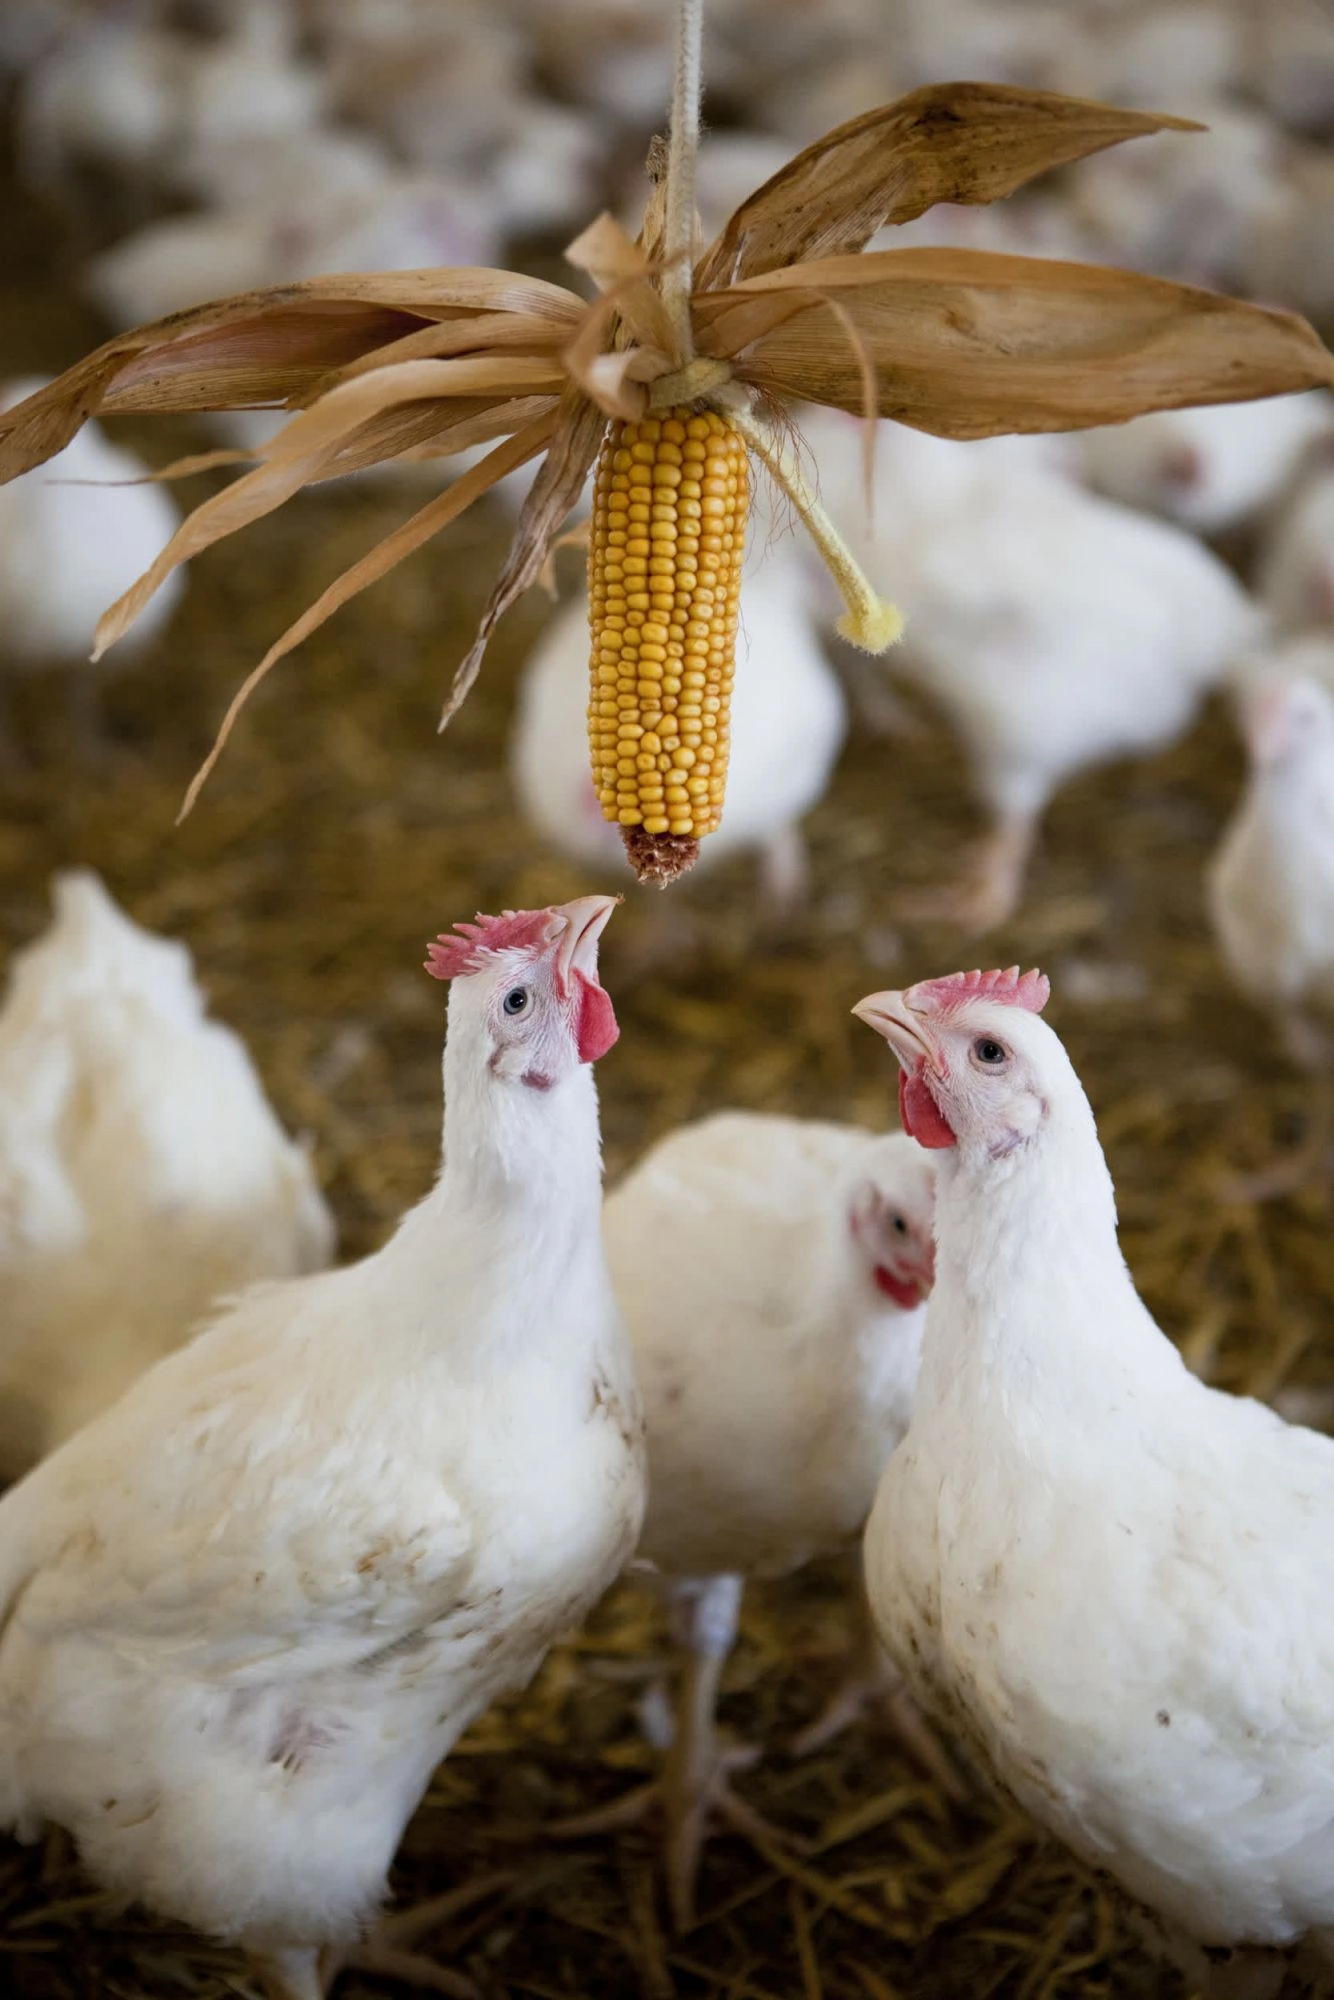 Chickens on a higher welfare farm